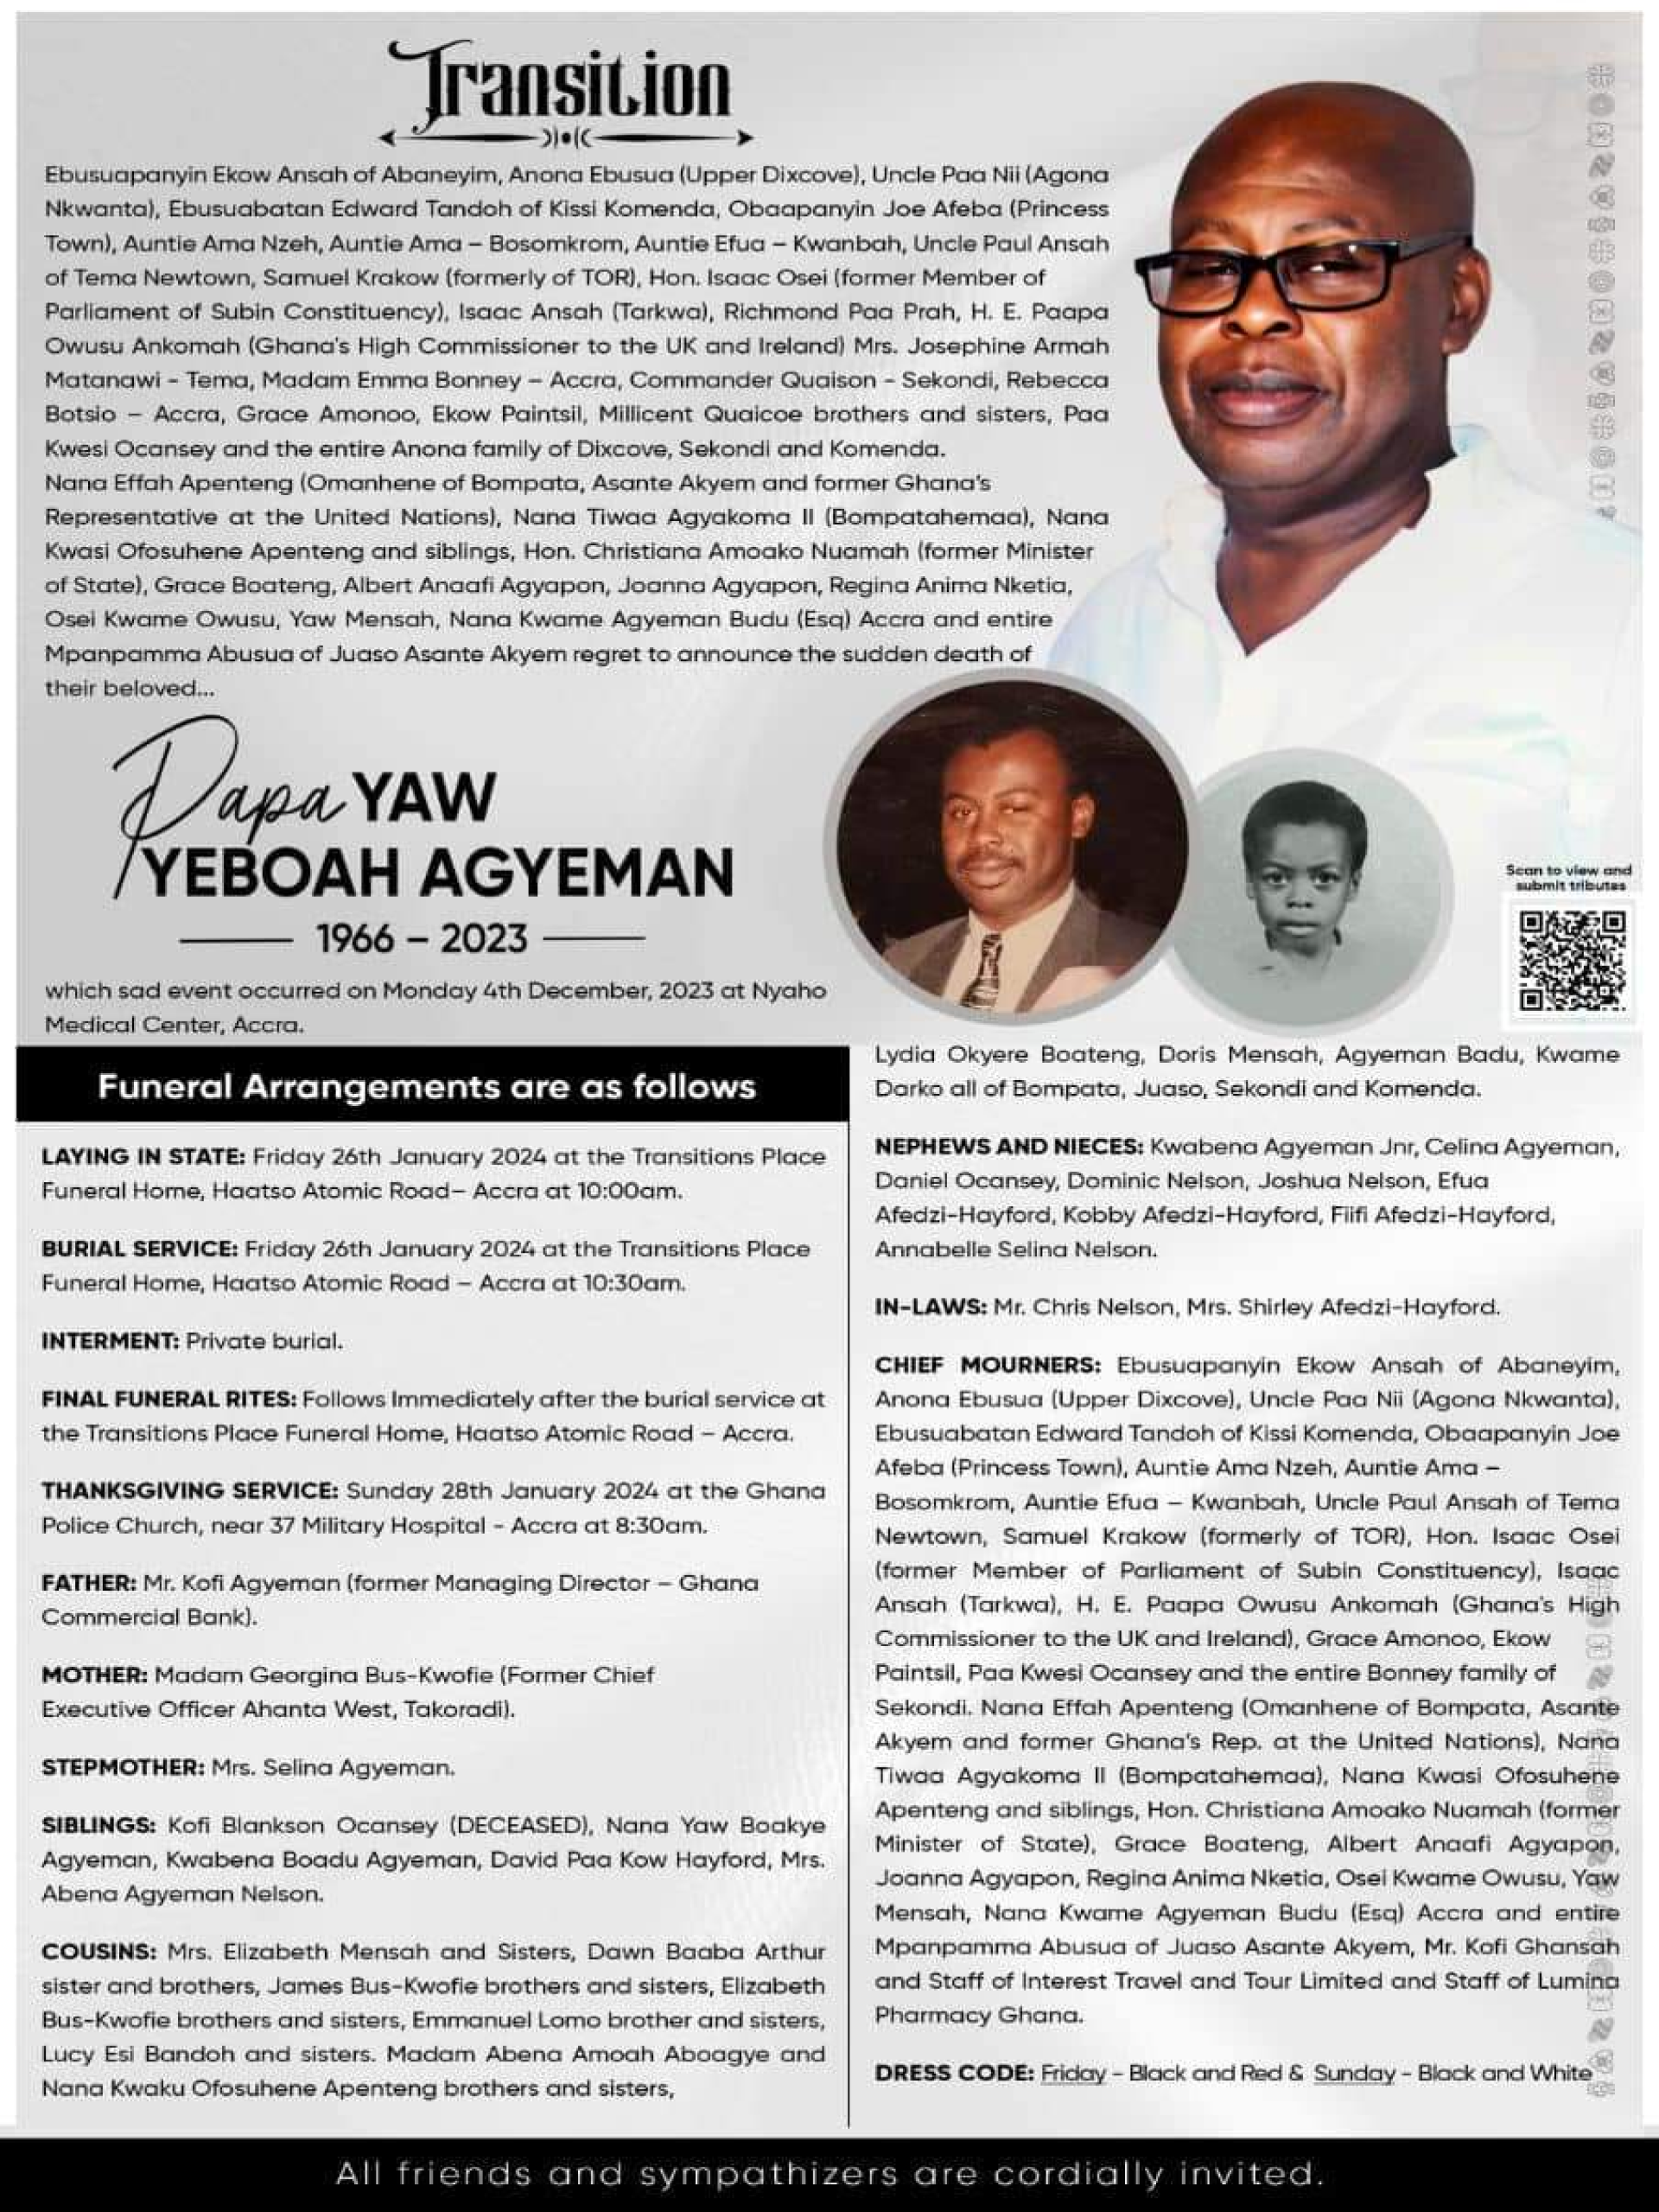 Papa Yaw Yeboah Agyeman